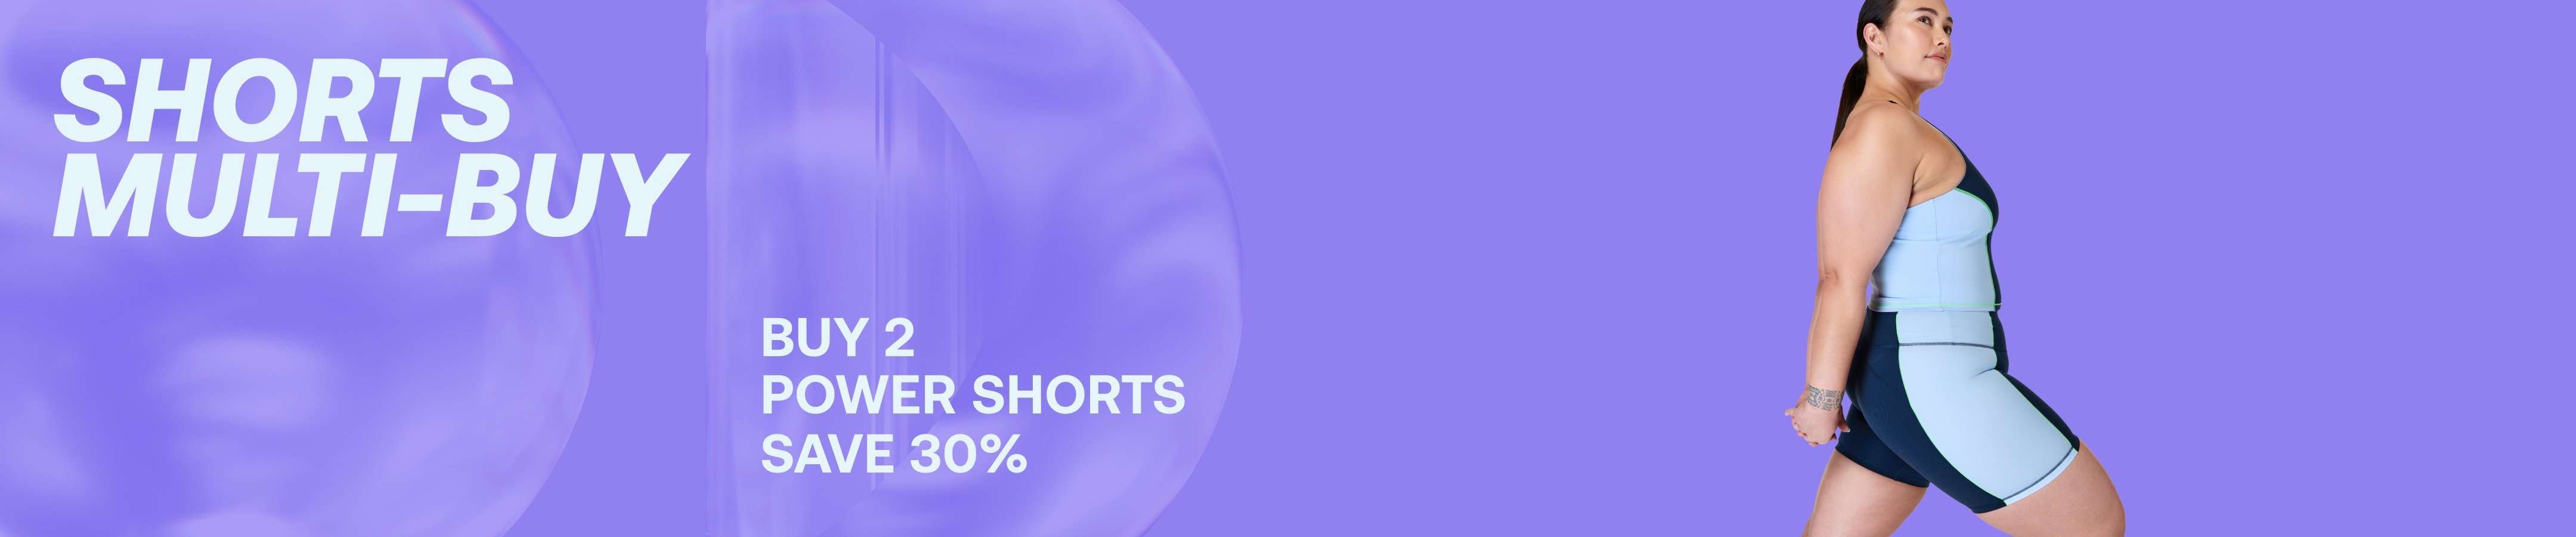 Power Shorts Multi-buy